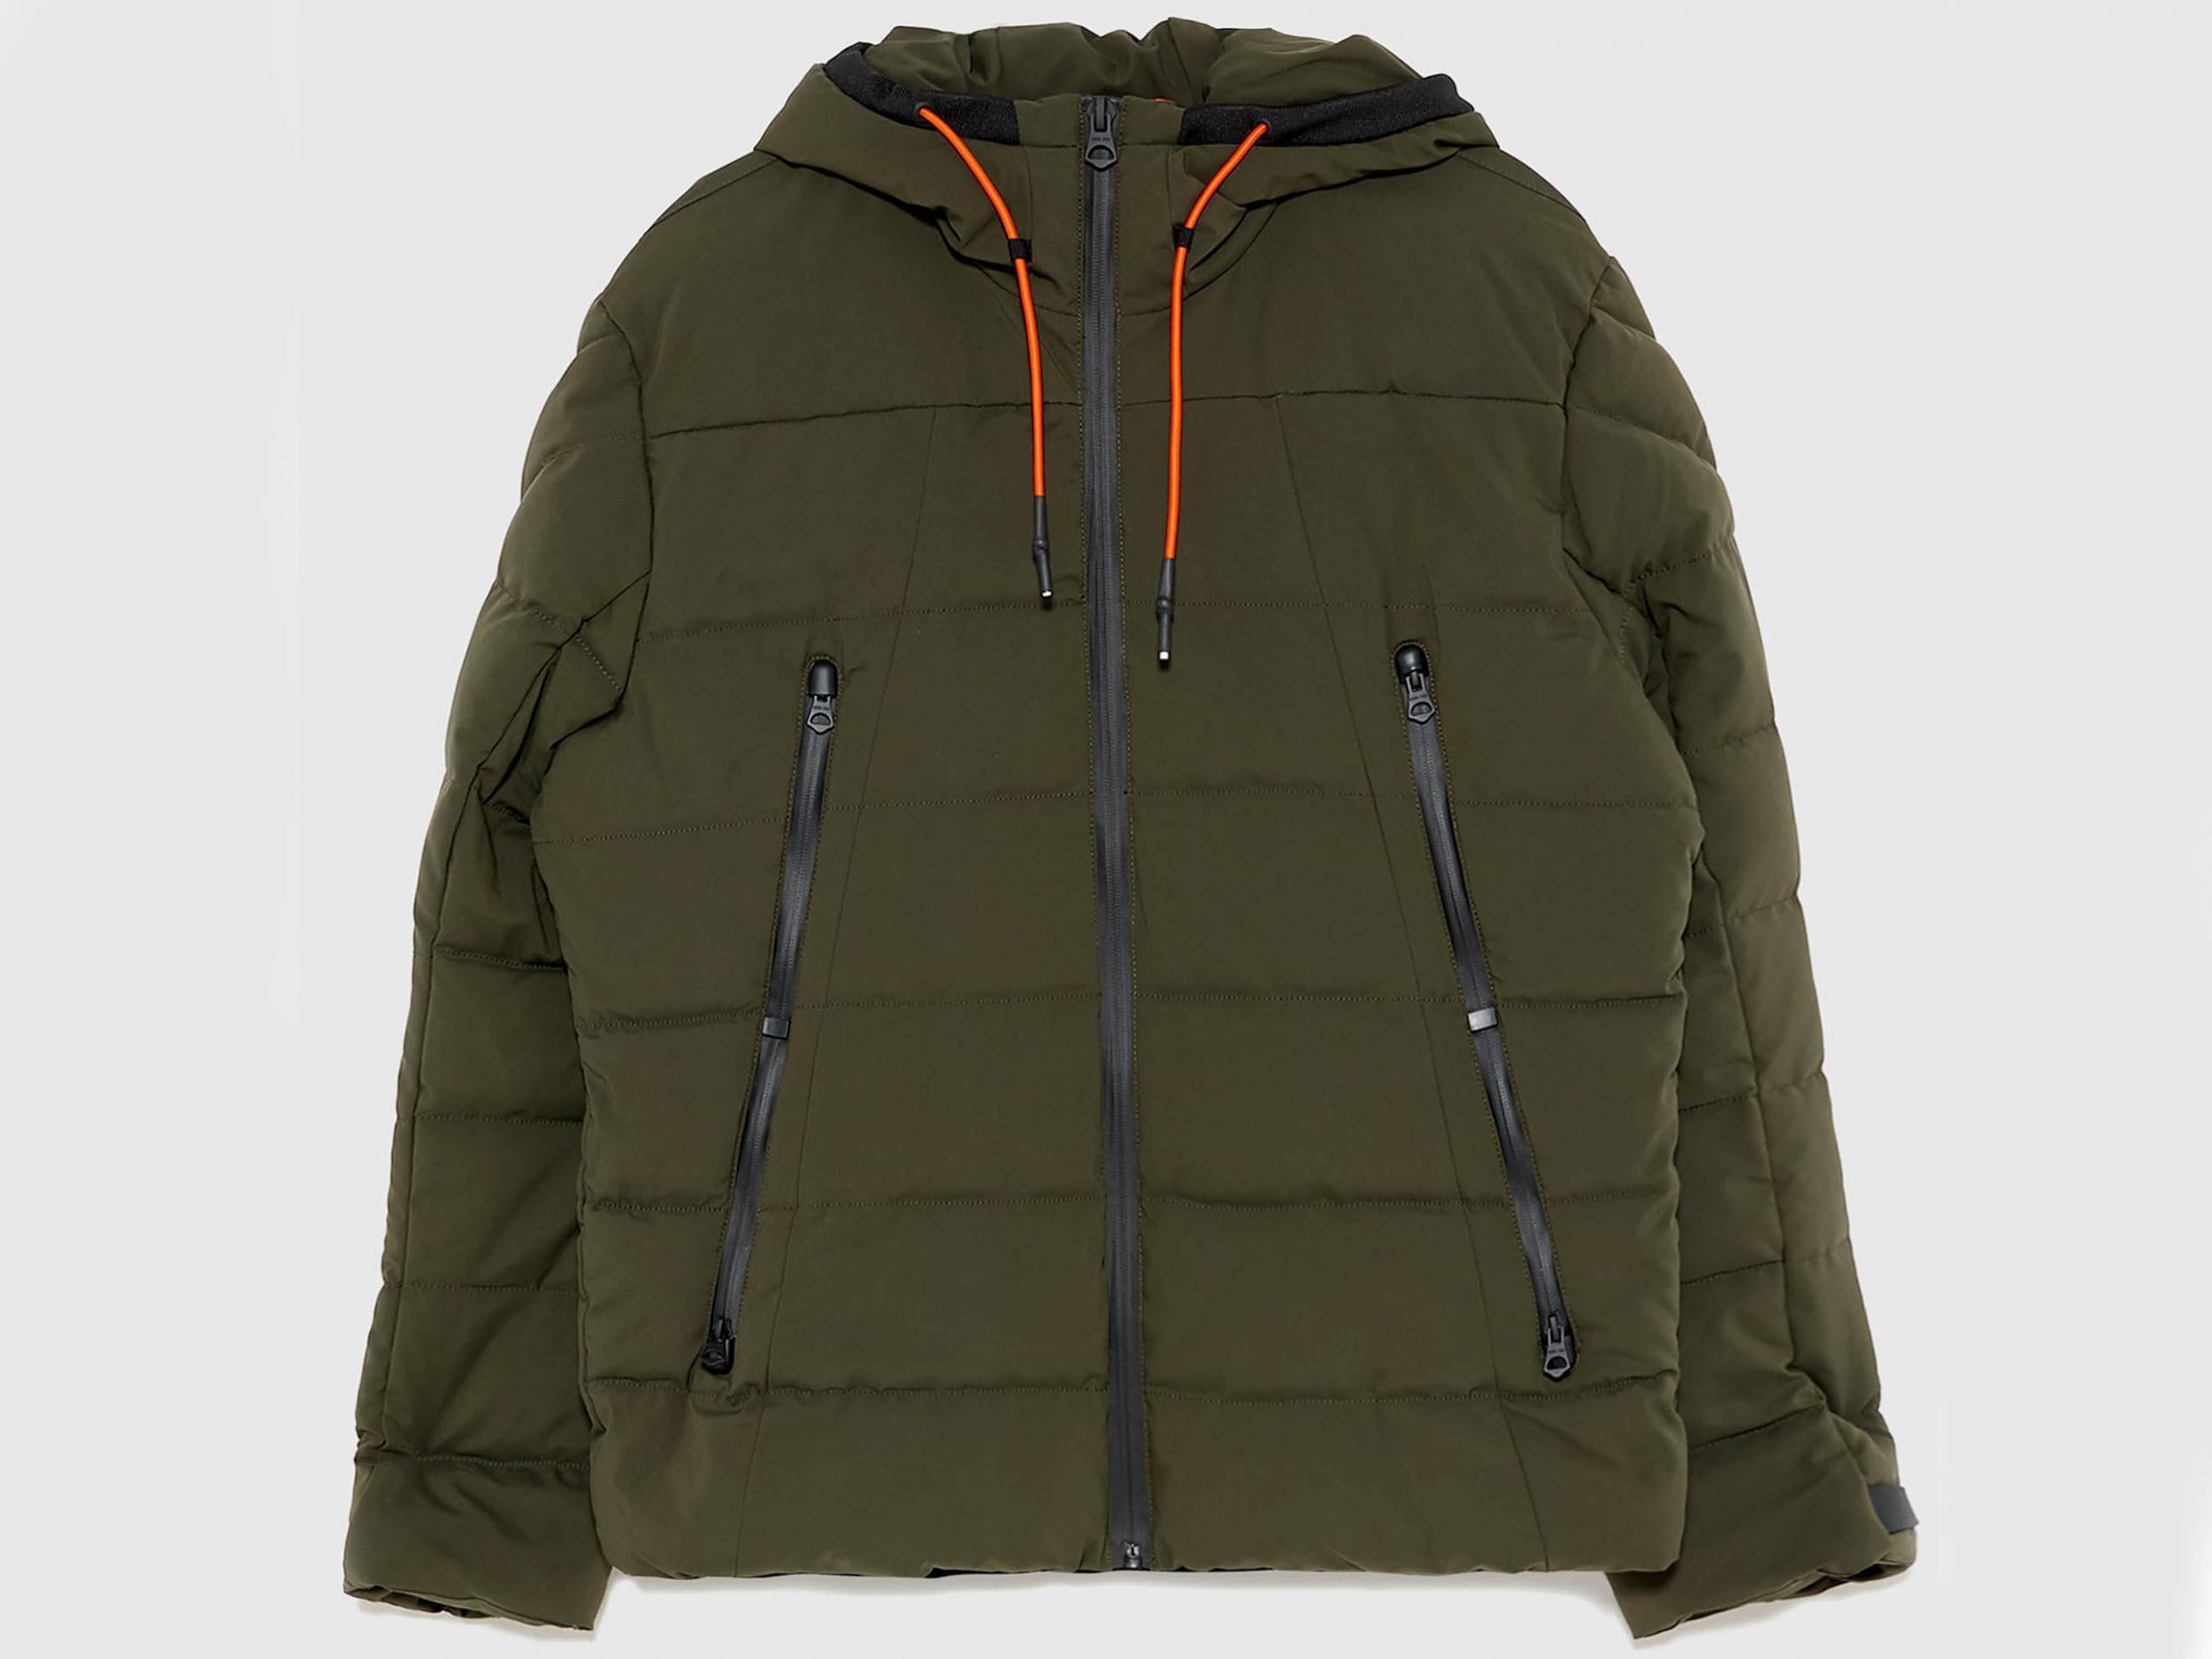 Down Puffer Jacket with Hood, £69.99, Zara